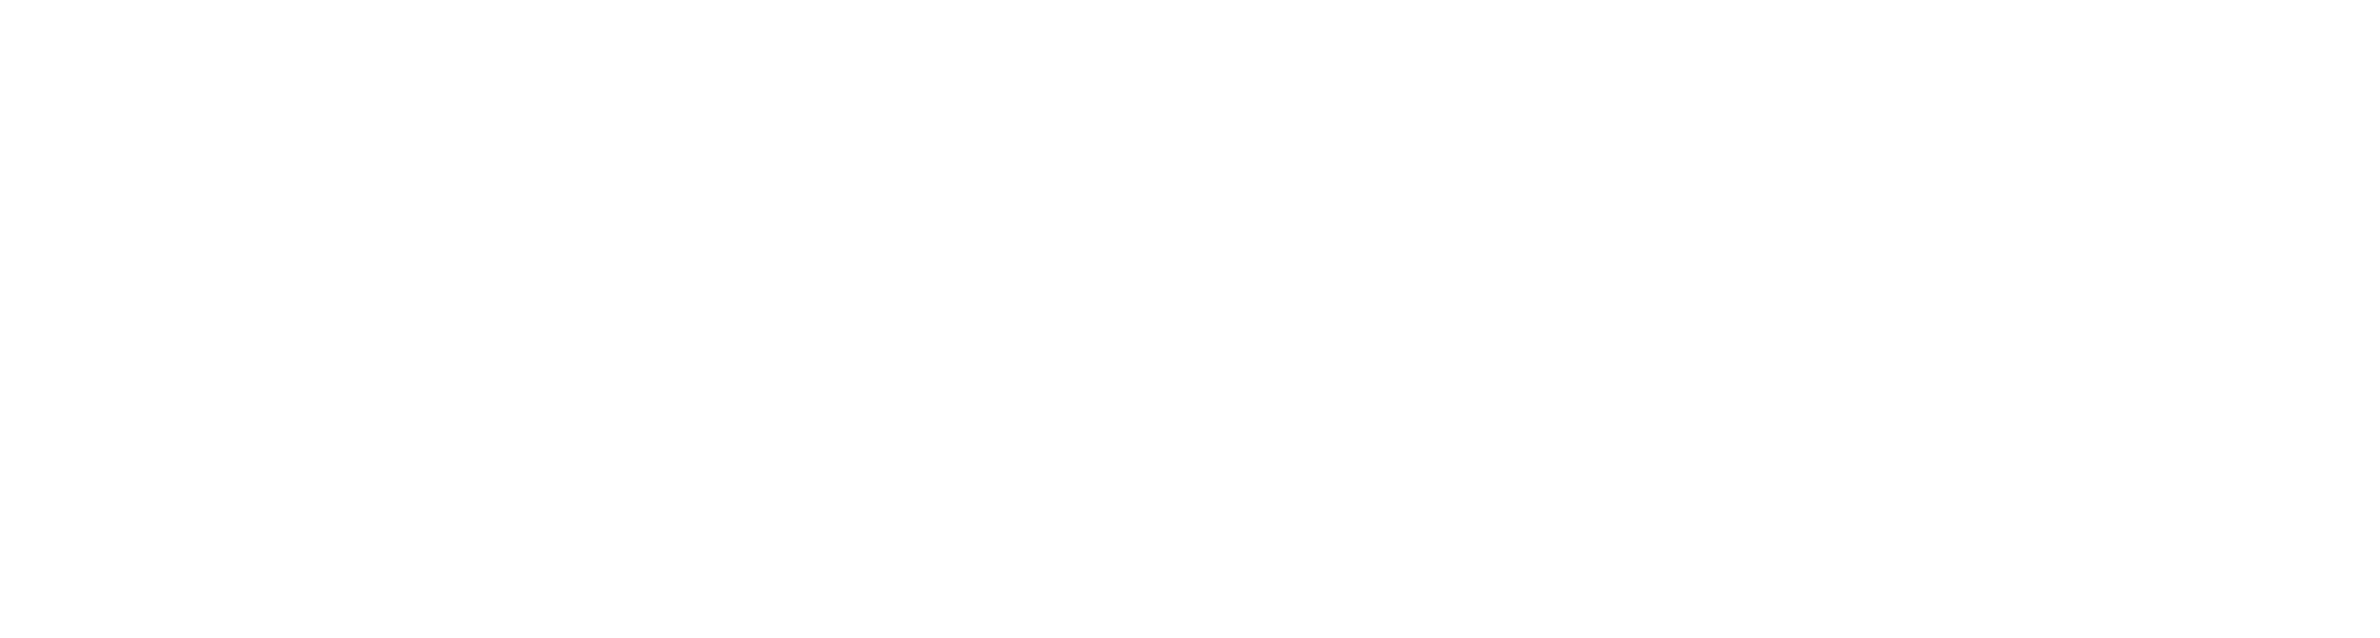 Brain Based Conversation Skills logo